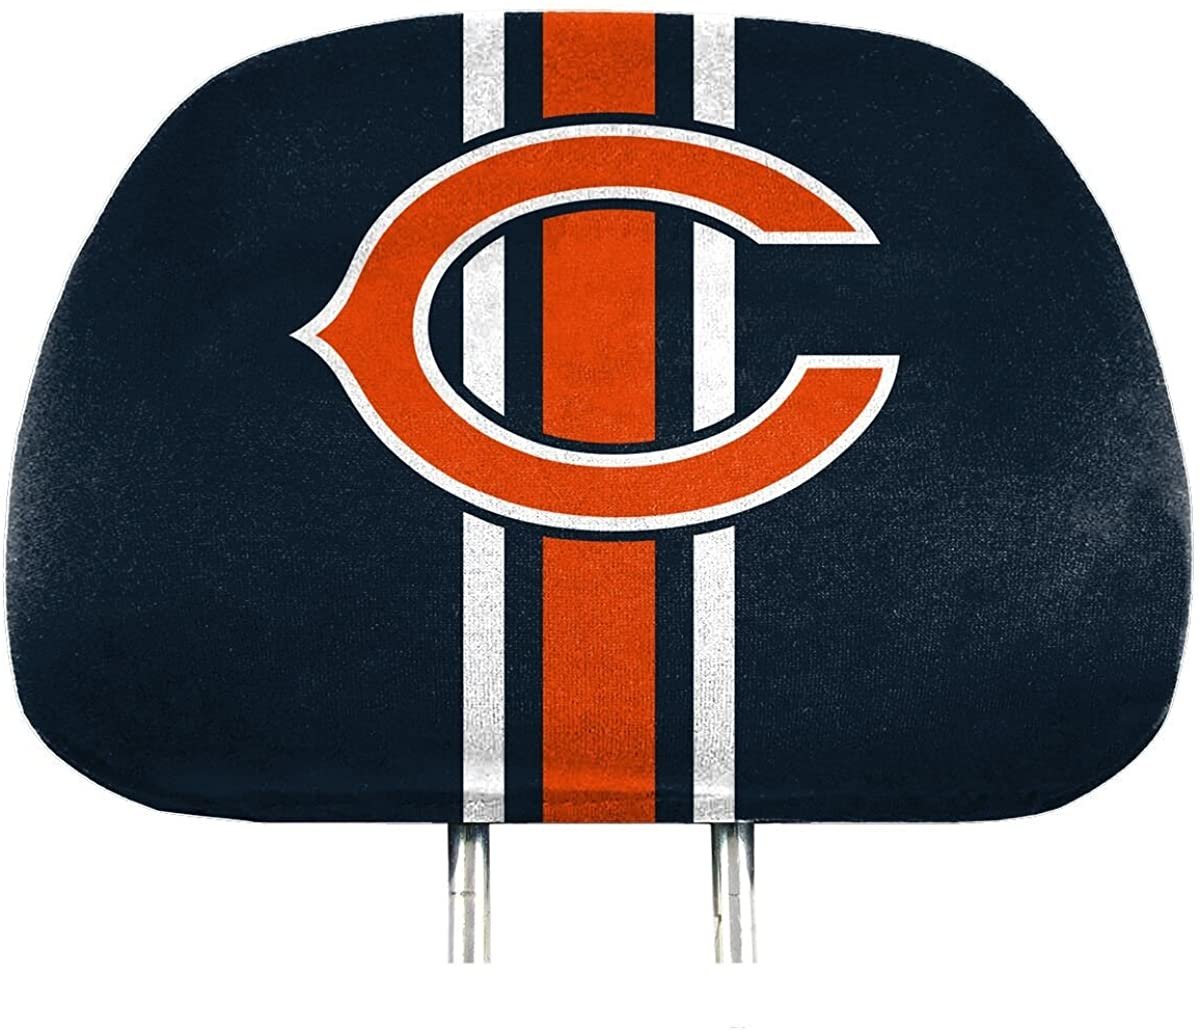 Chicago Bears Premium Pair of Auto Head Rest Covers, Full Color Printed, Elastic, 10x14 Inch